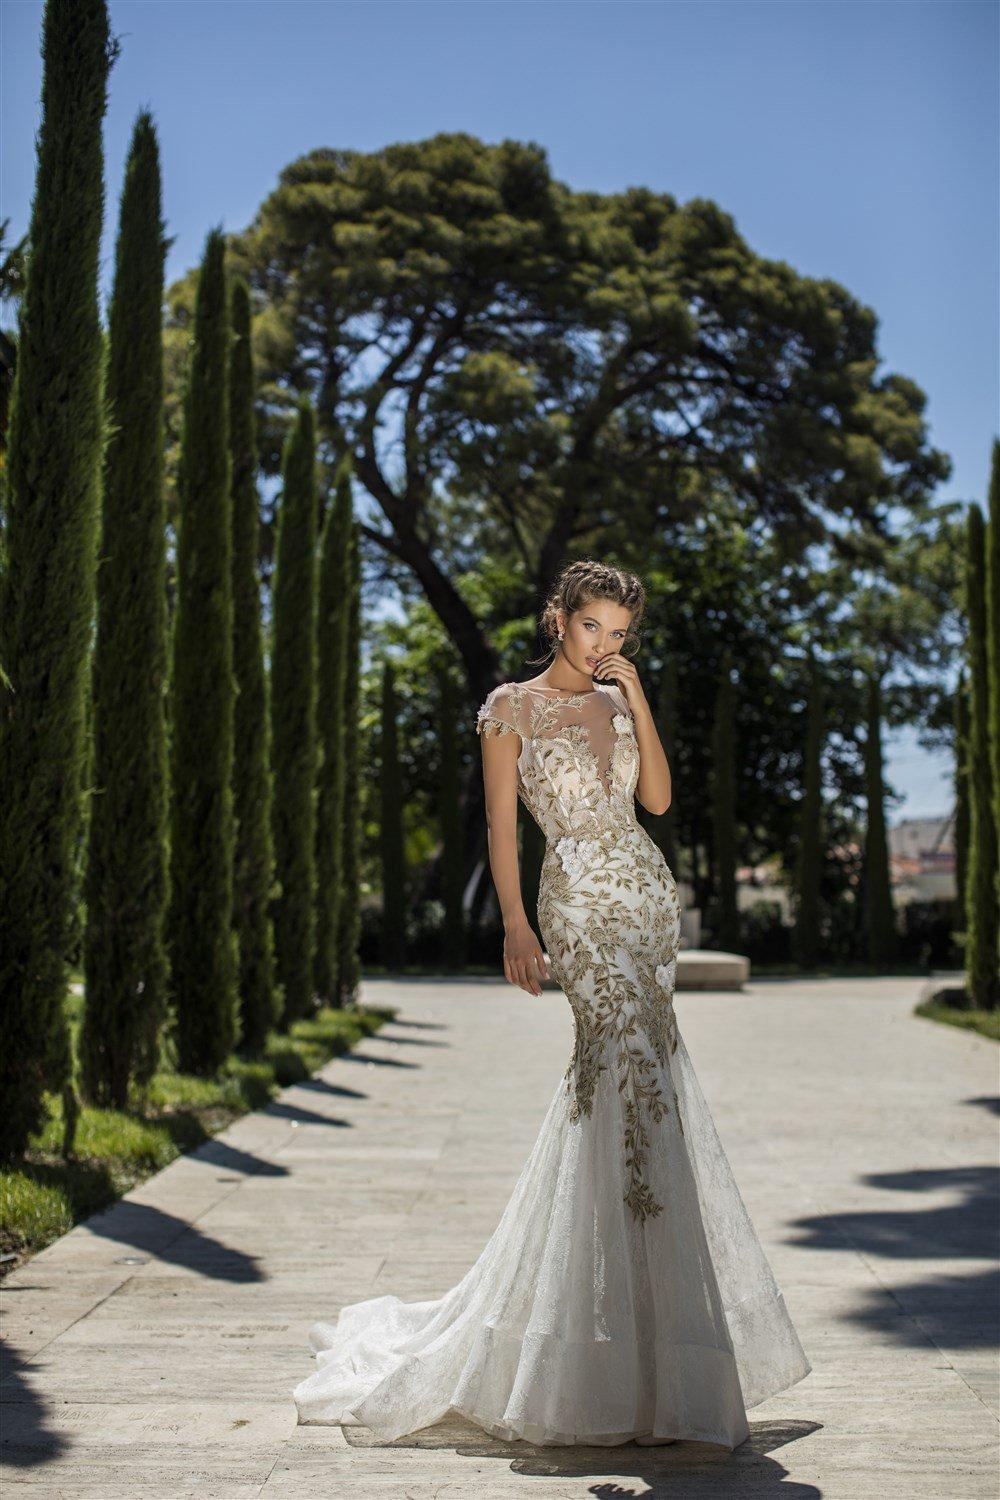 Anillo duro Oposición regular 35 vestidos de novia en dorado para un look ¡brillante! - bodas.com.mx